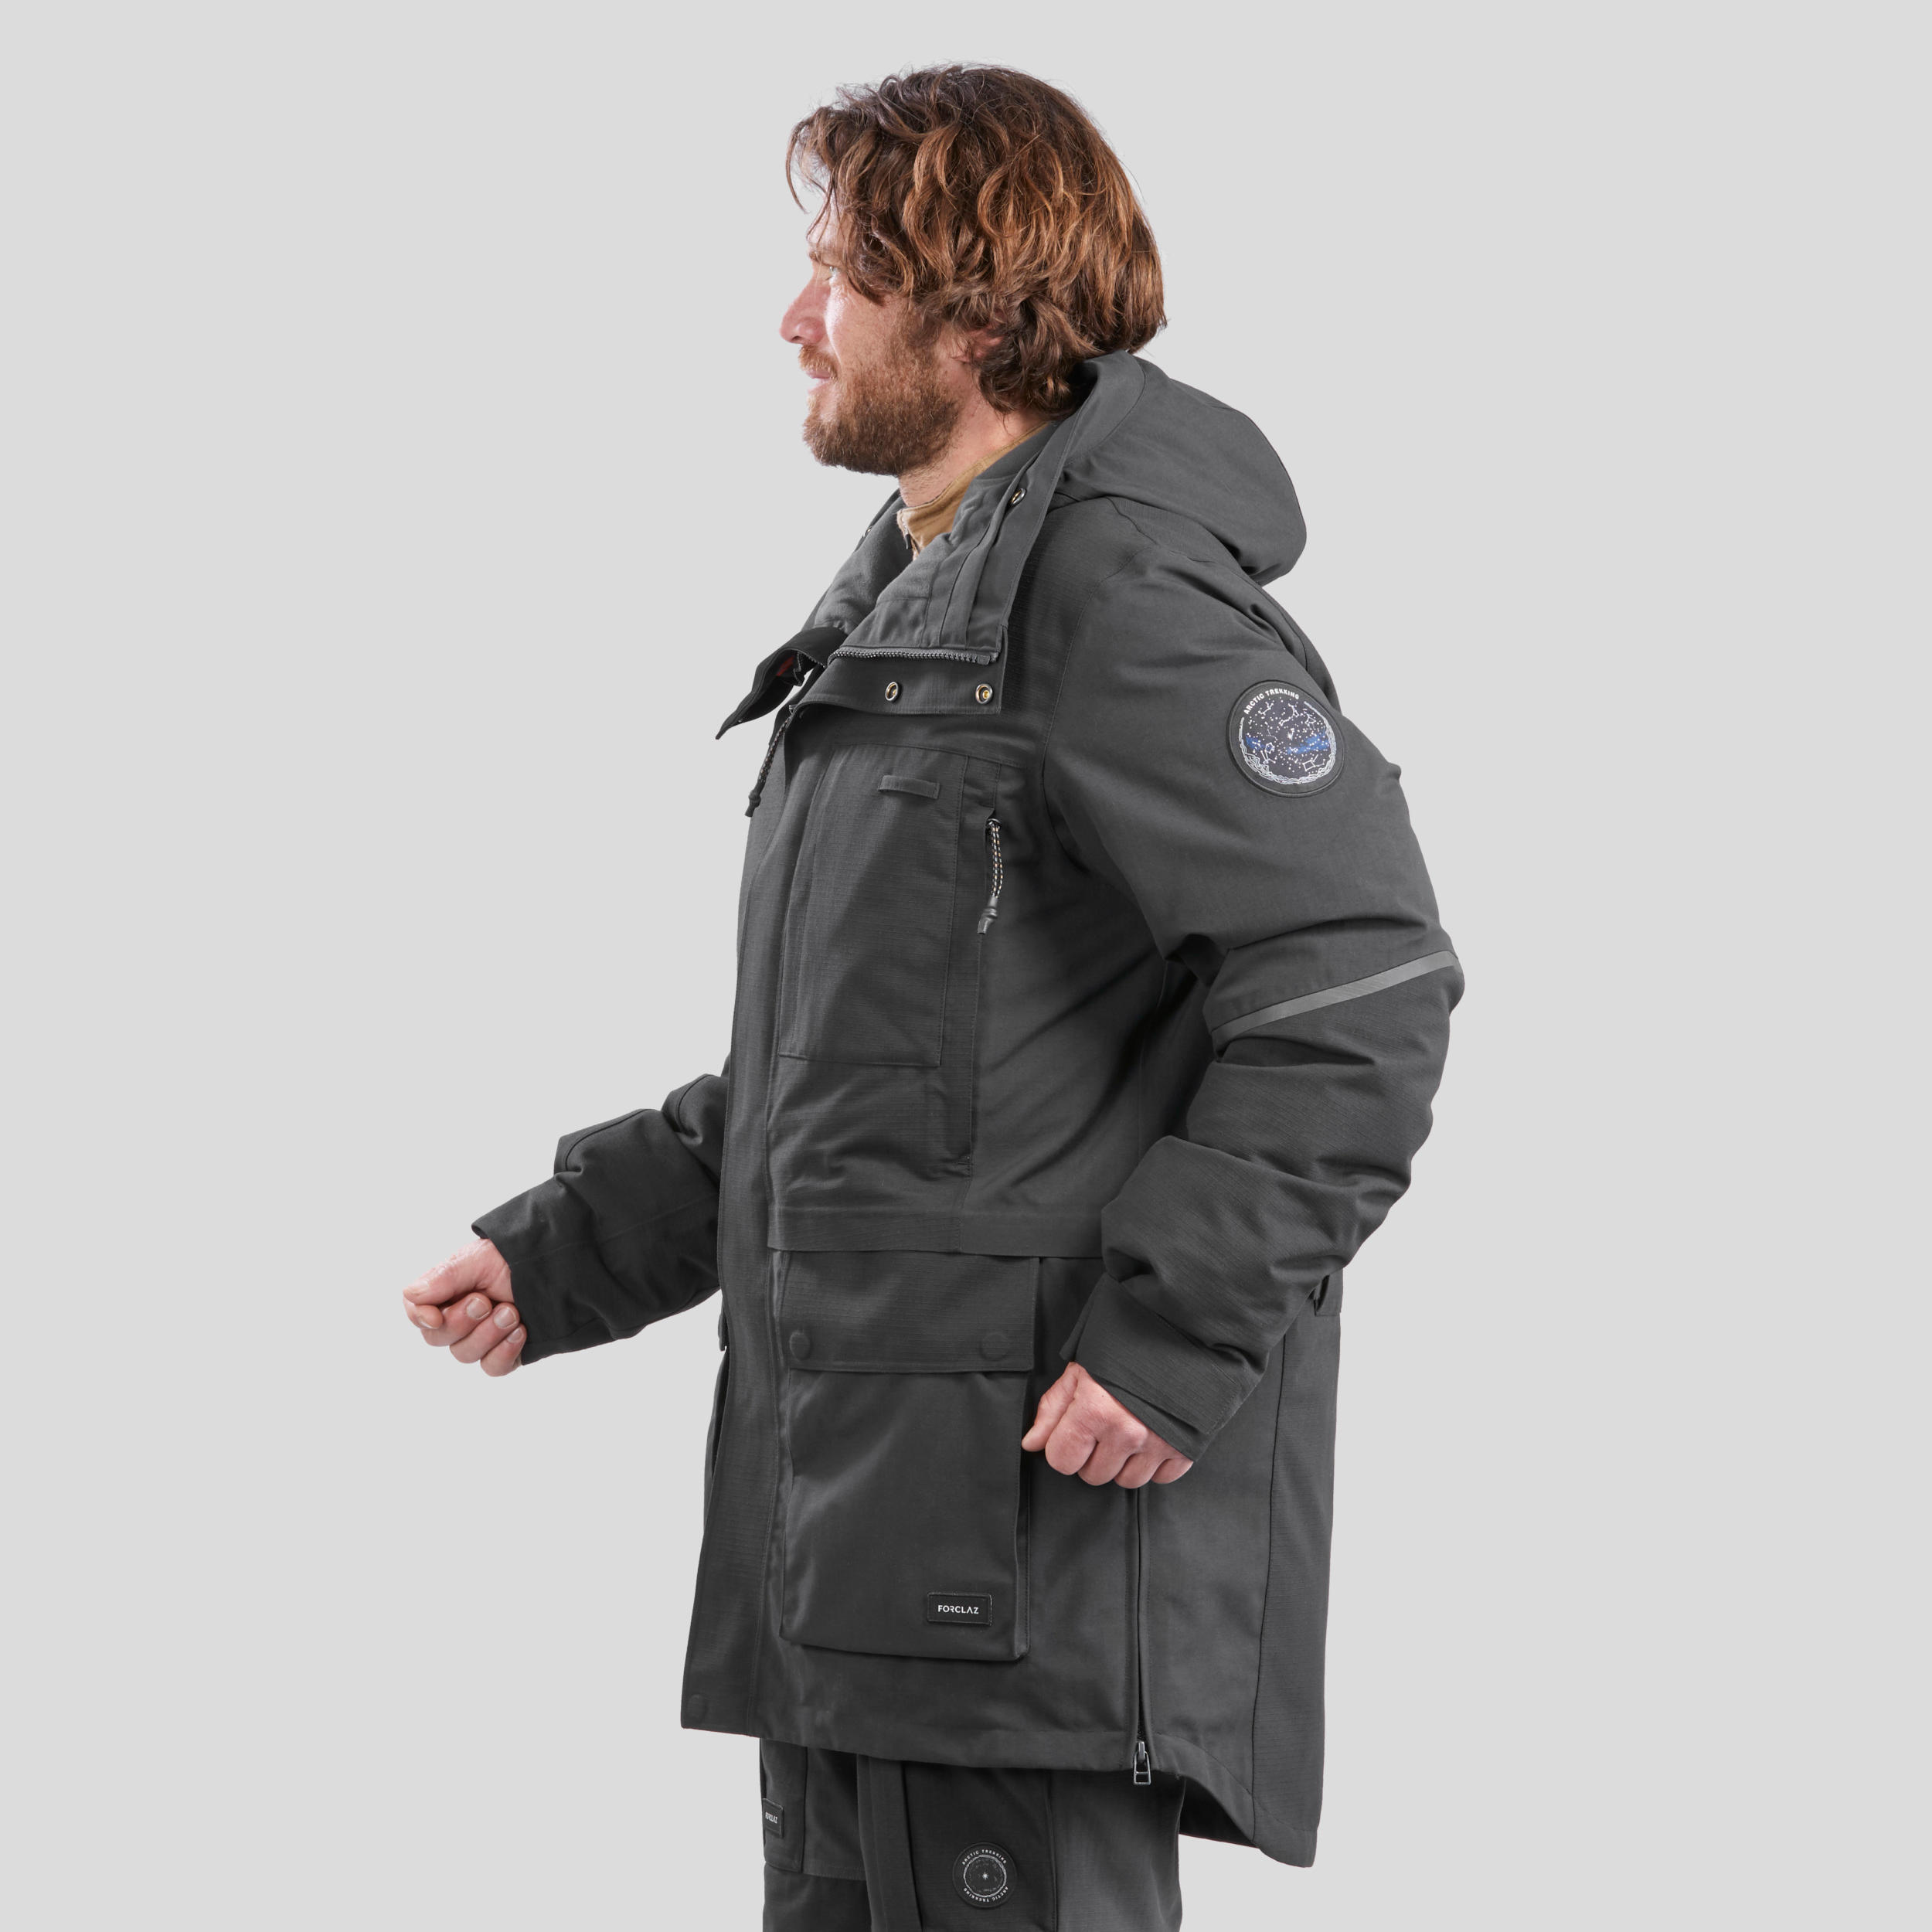 Unisex waterproof parka jacket - 900 - Black 5/21